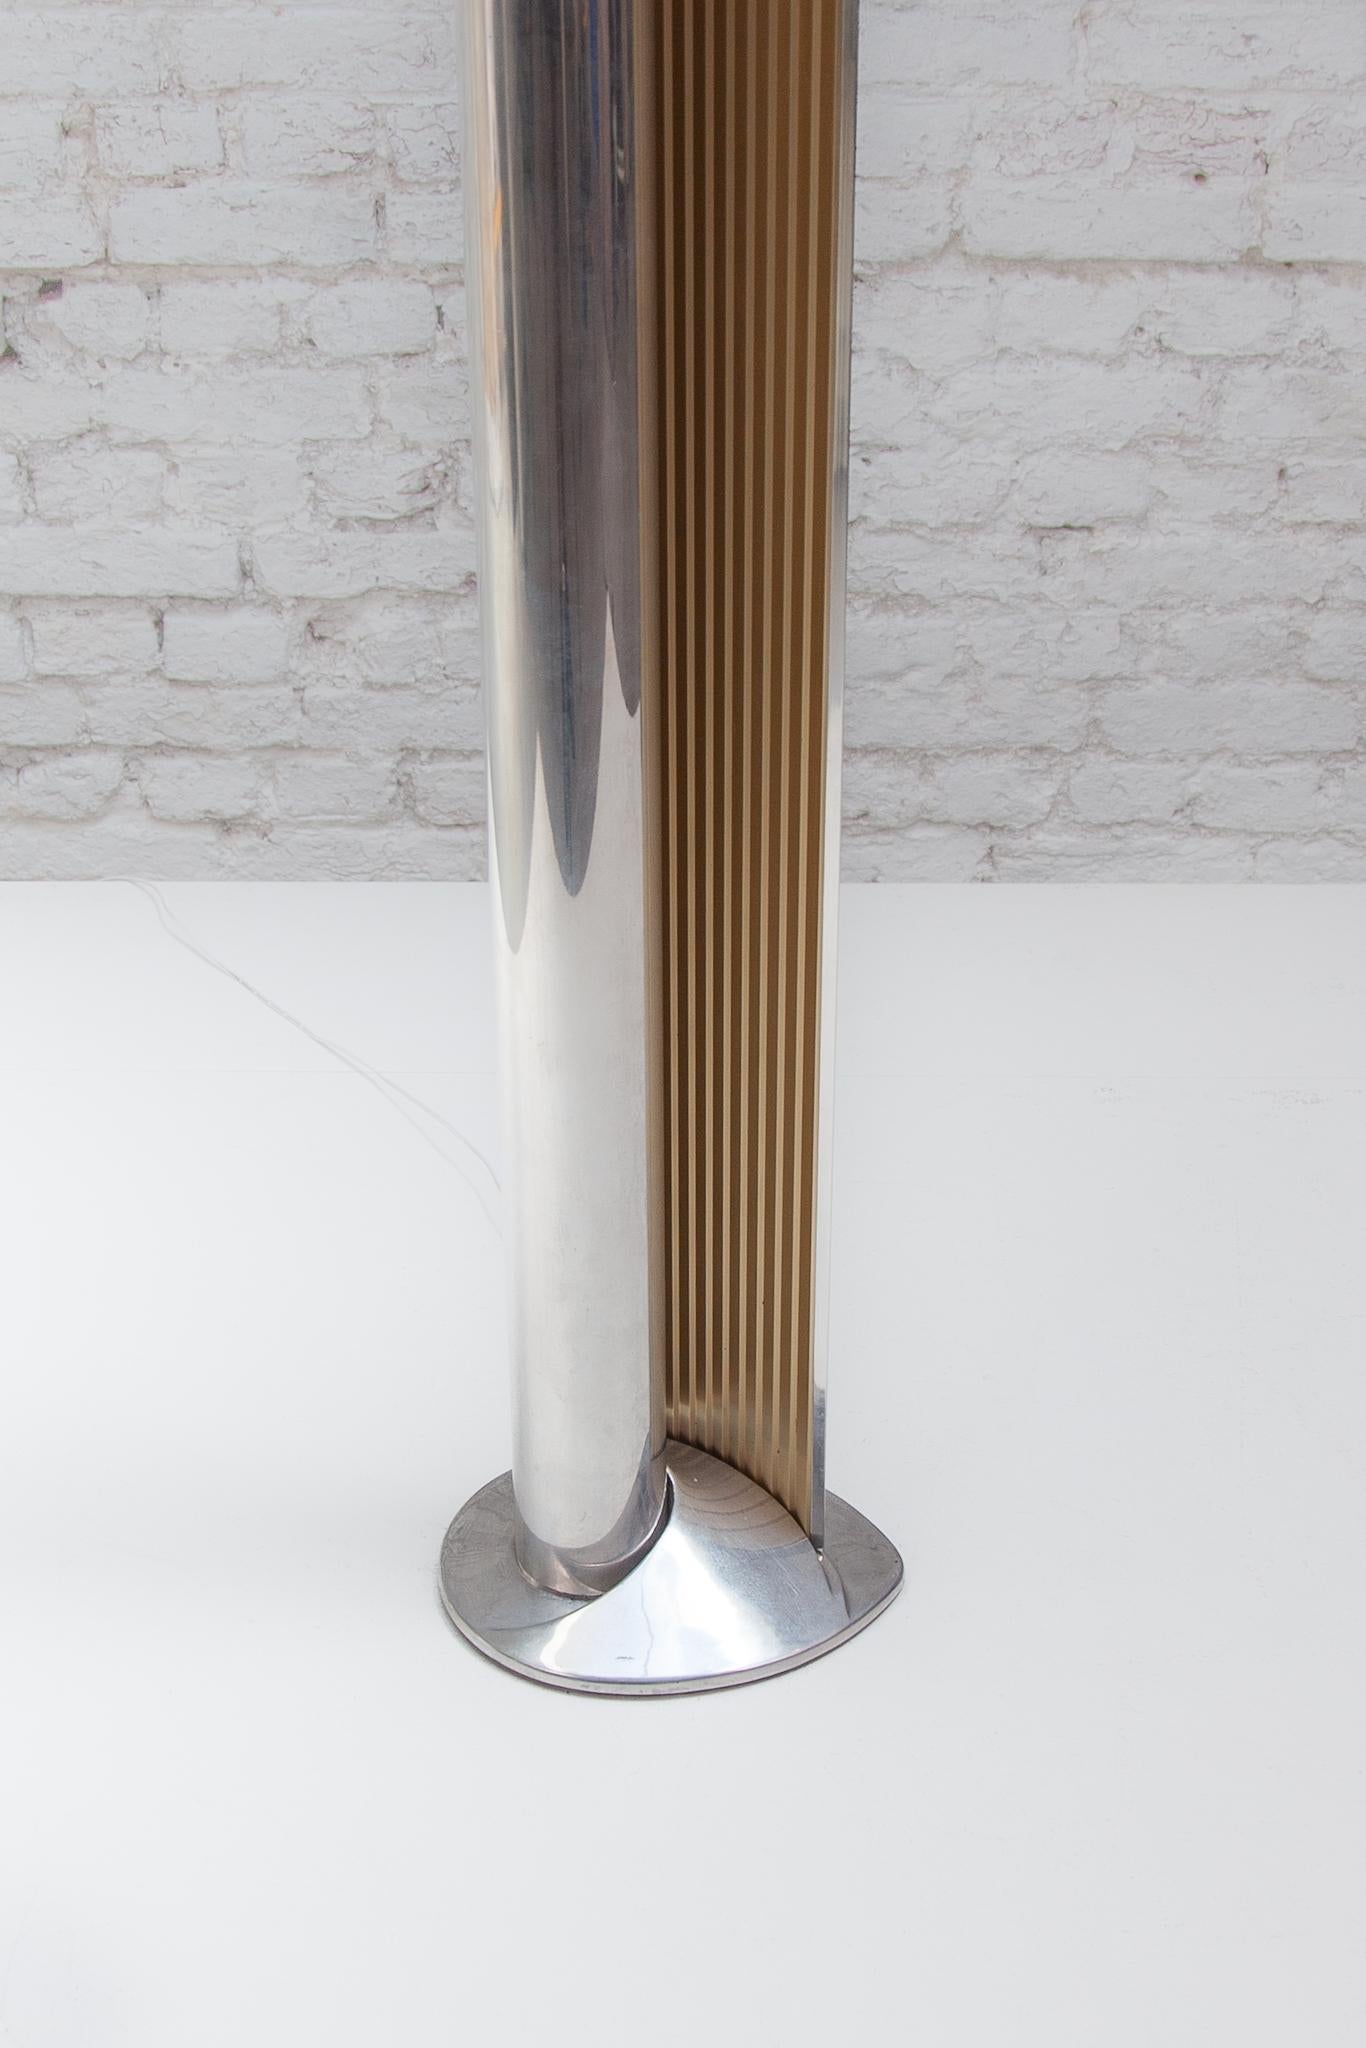 Aluminum 1980s Penombra Floor Lamp by Antoni Flores for Sargot Barcelona For Sale 6